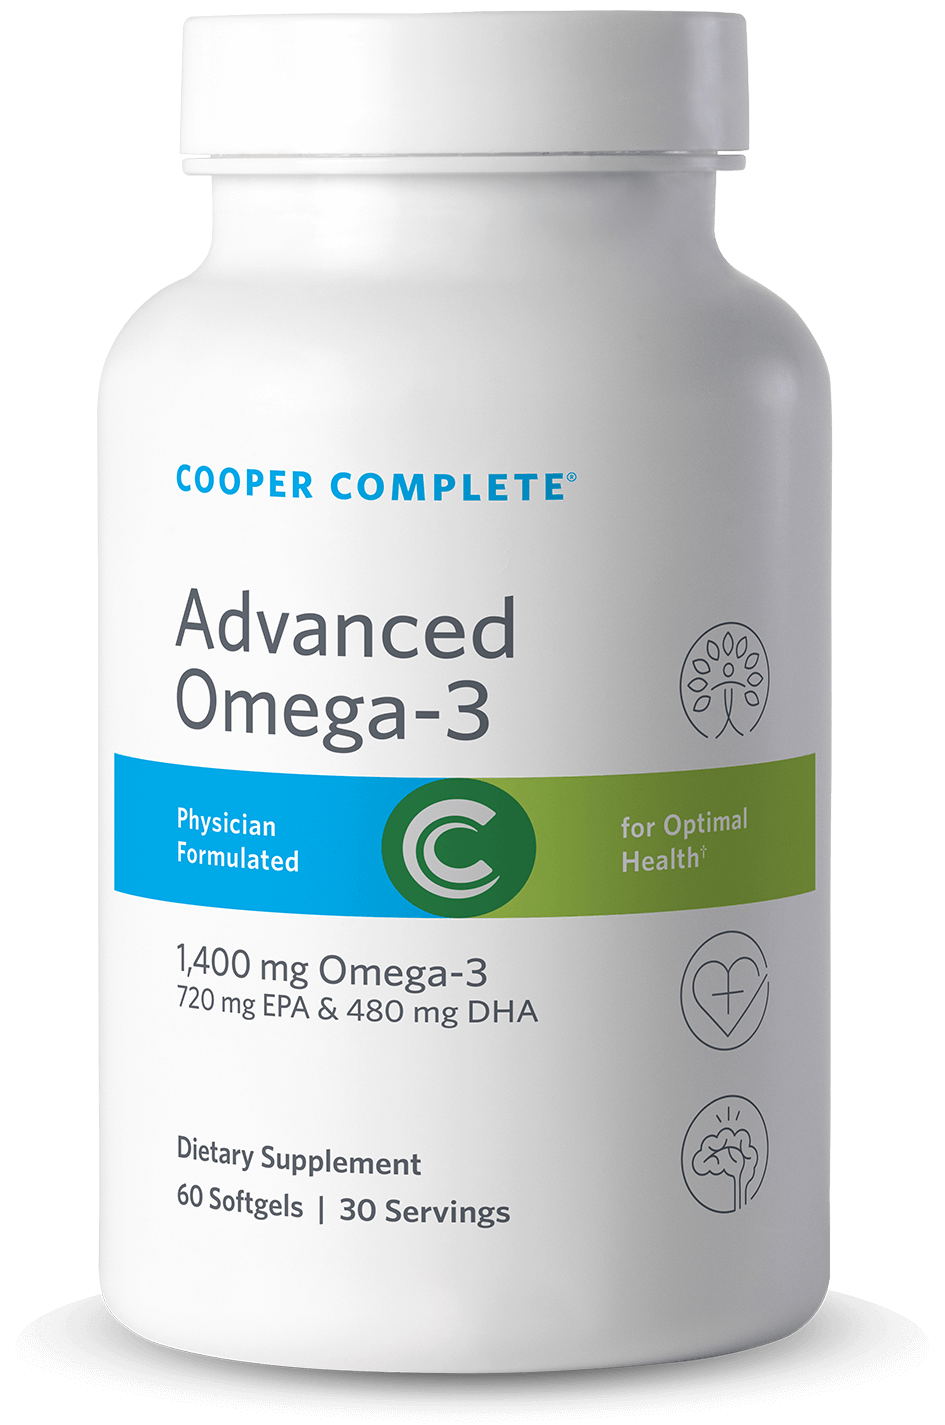 Photo of Cooper Complete Advanced Omega 3 Supplement bottle